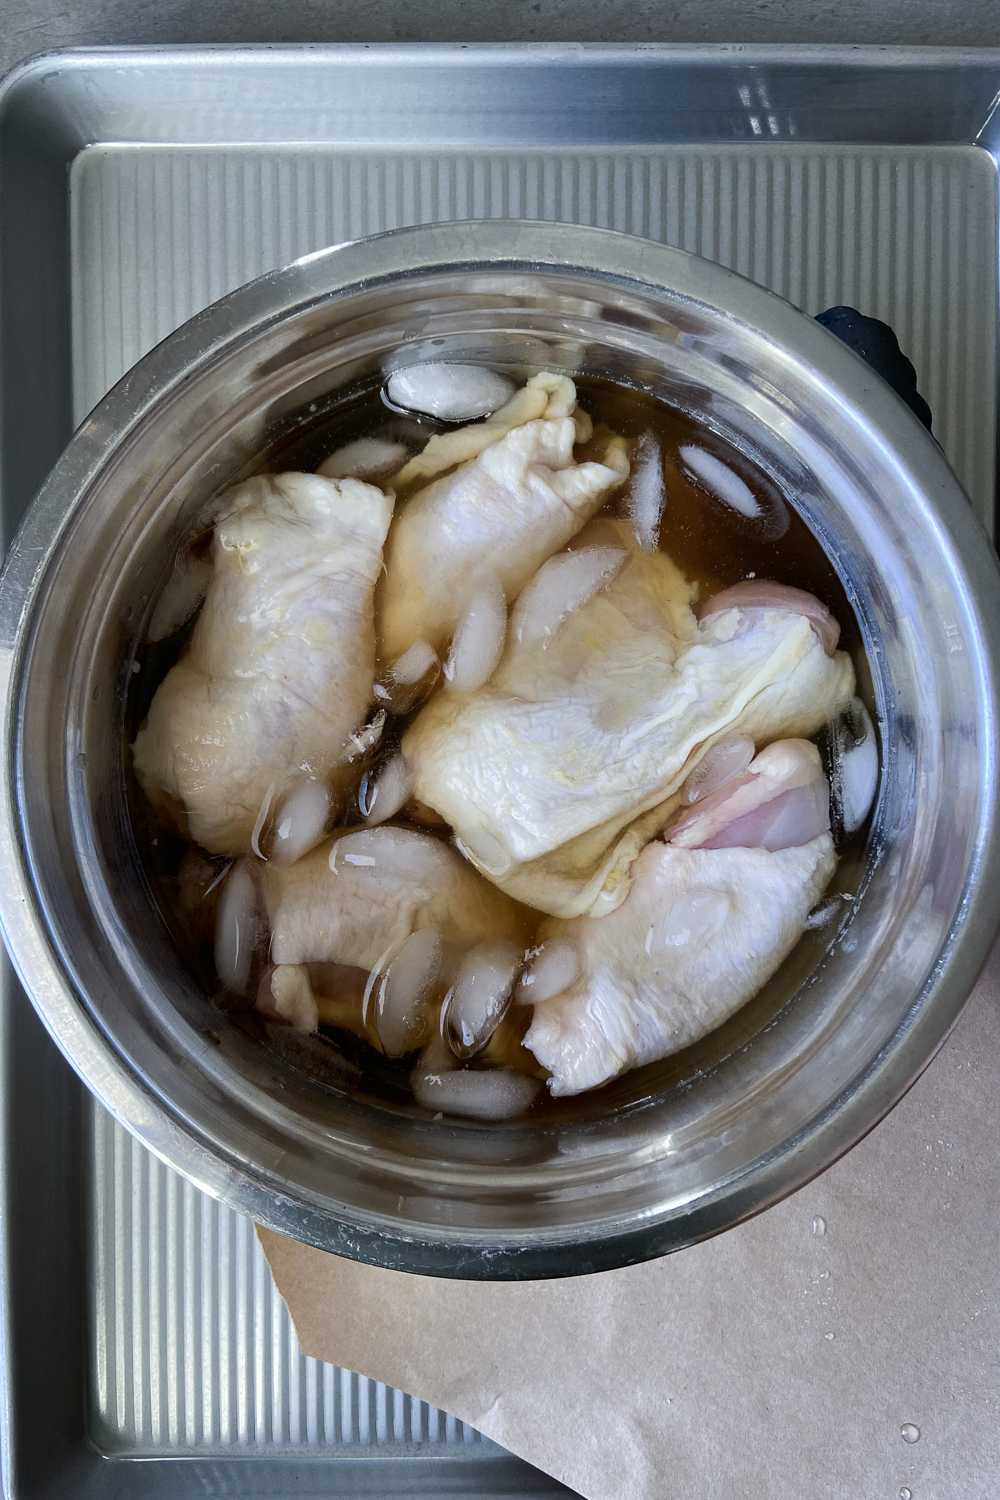 Brine chicken thighs before smoking them for exceptionally moist dark meat